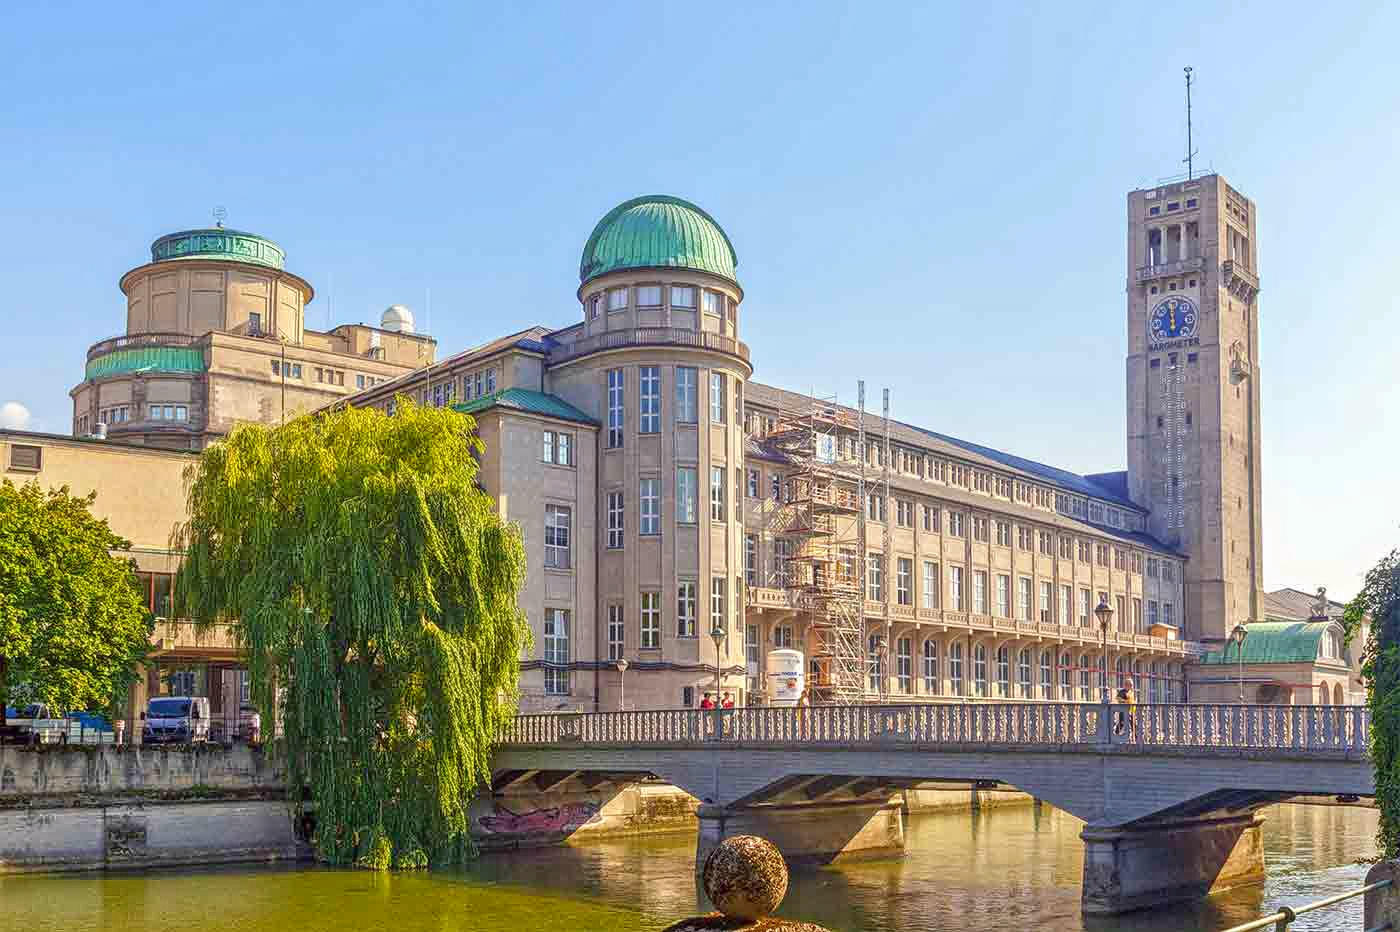 Deutsches Museum Overview